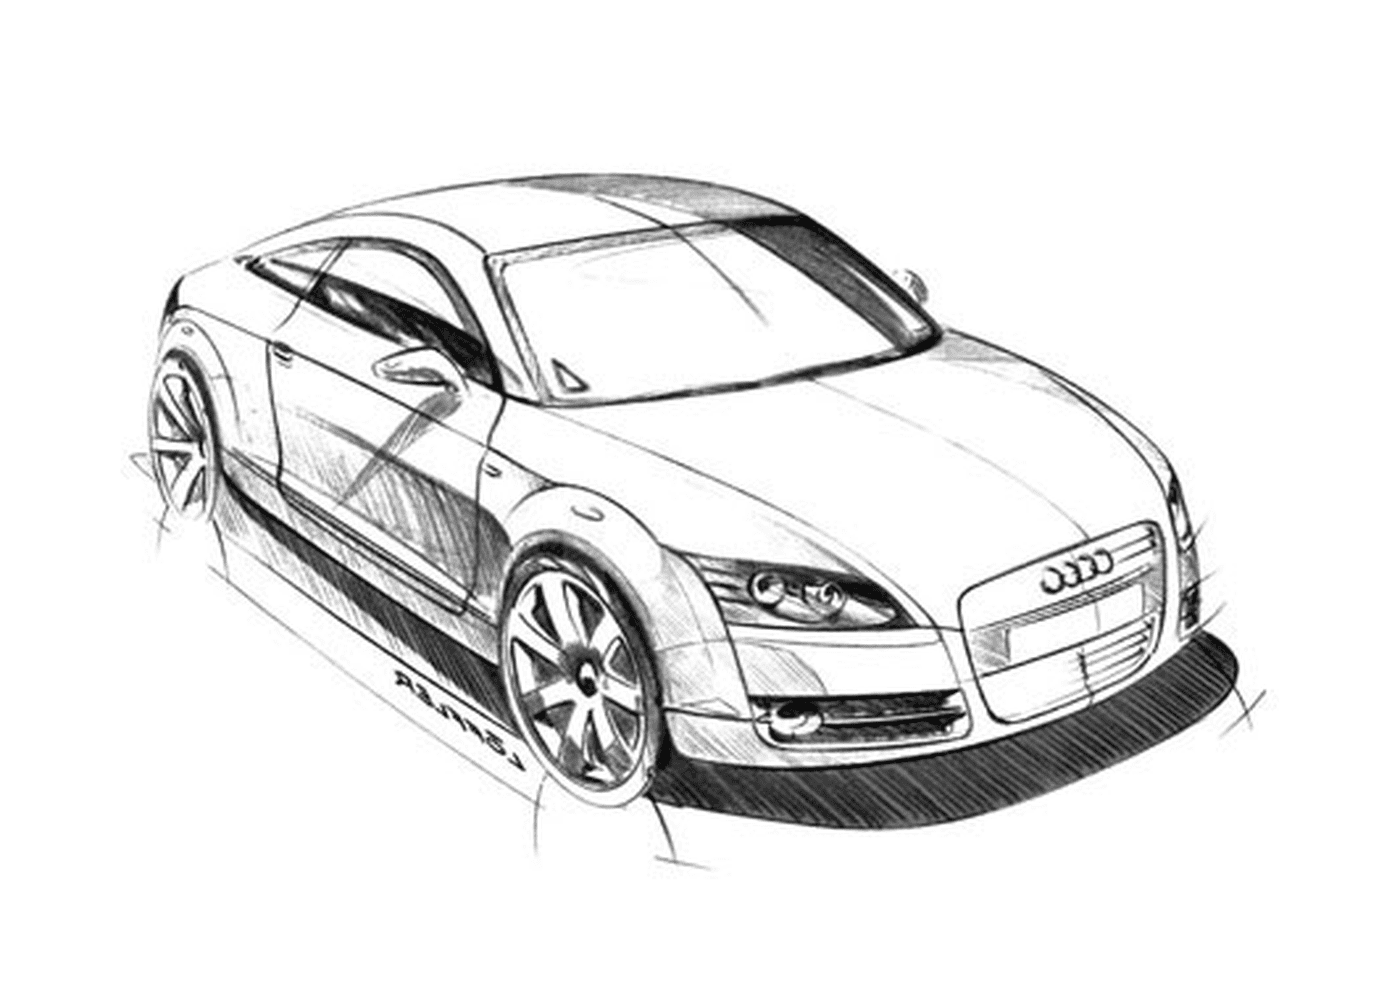  Audi car image, Audi car 